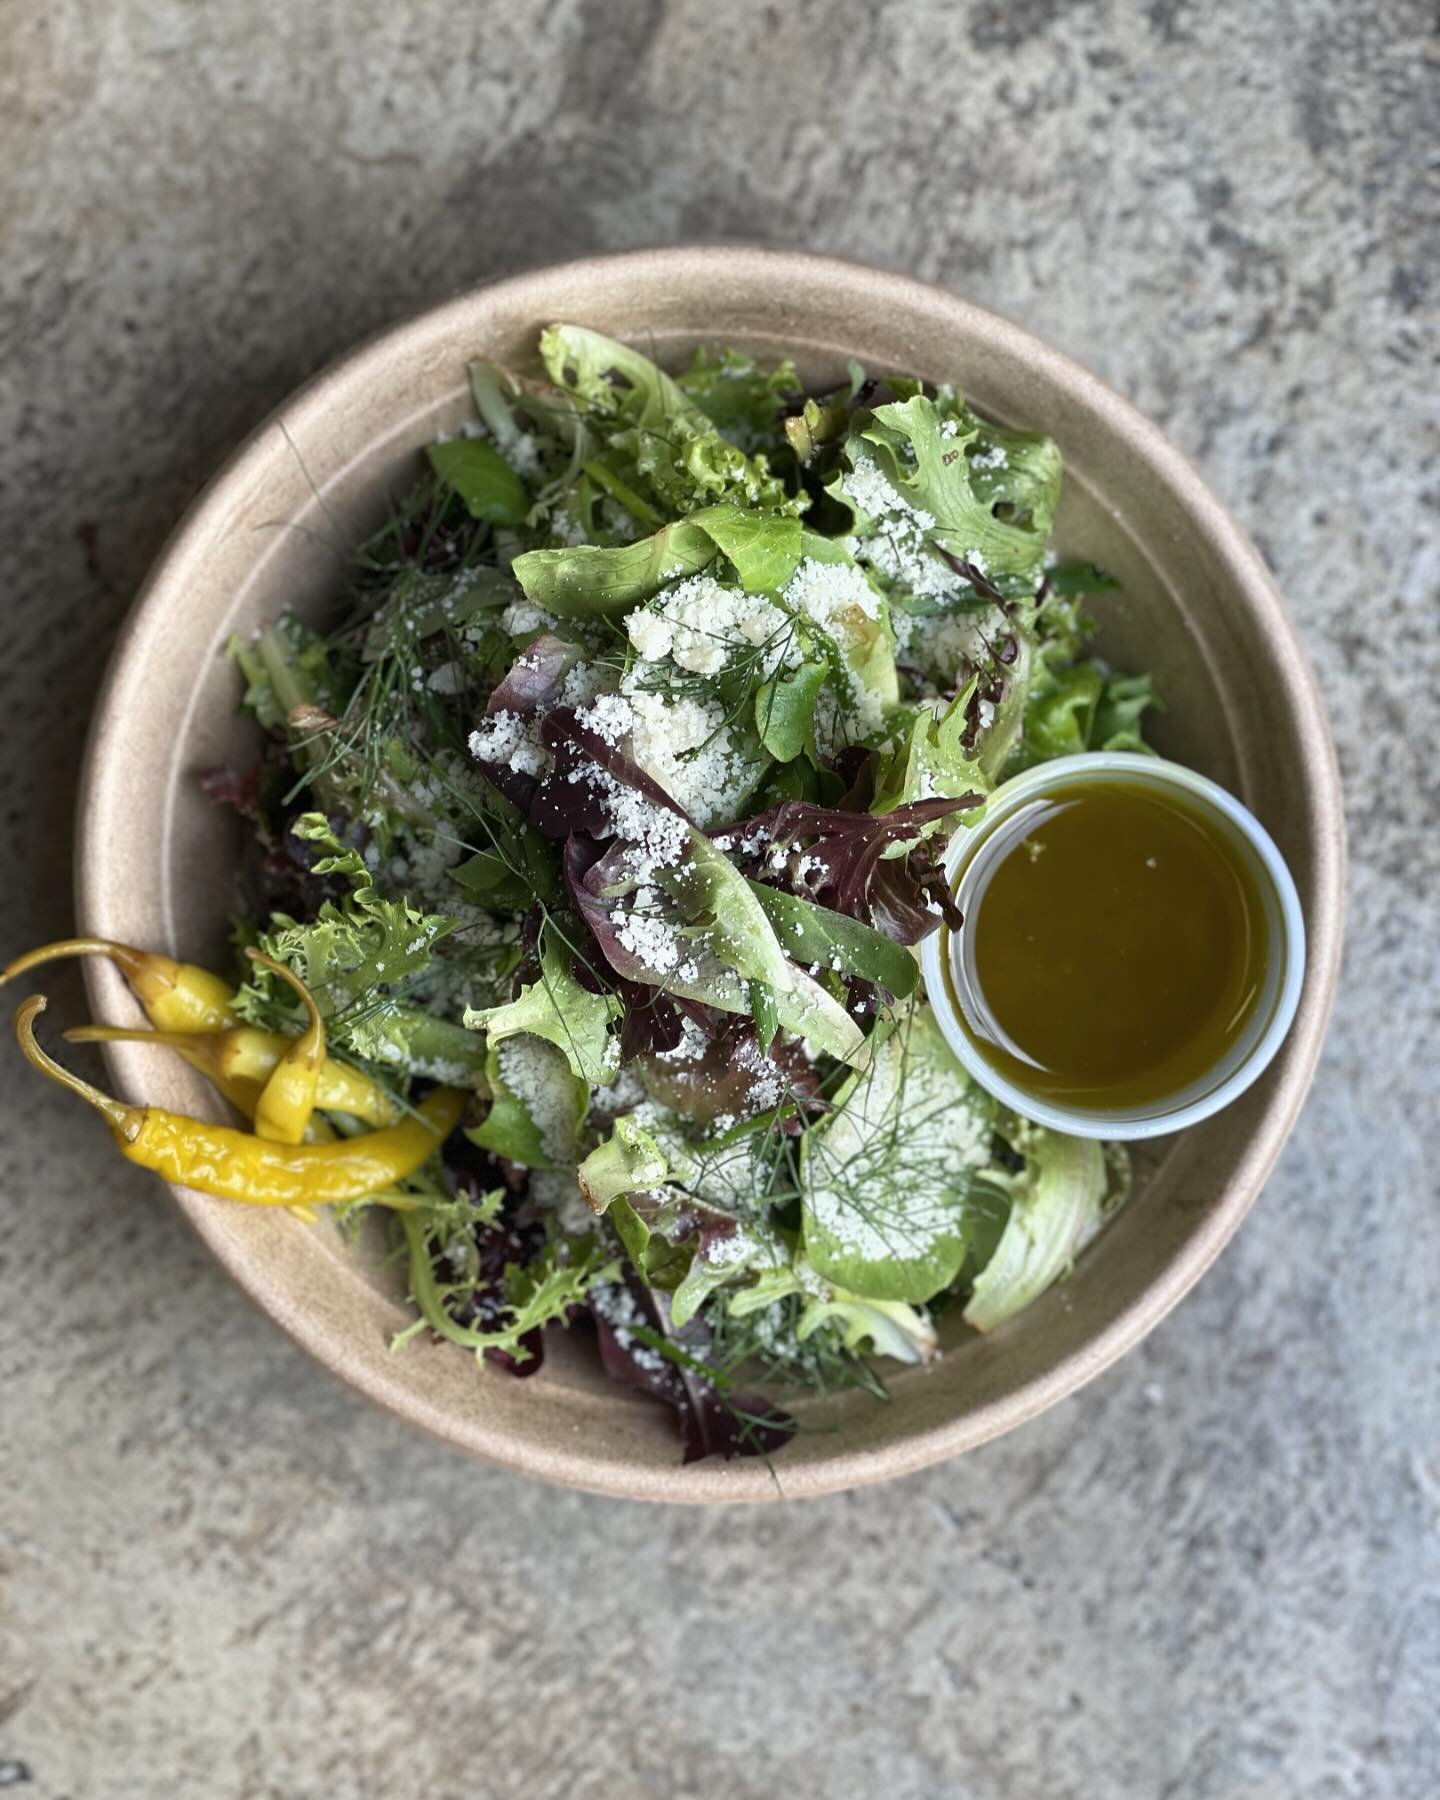 Green salad&hellip;simple, fresh, delicious.

Simple Greens - local lettuces, herbs ricotta salata, oregano vinaigrette